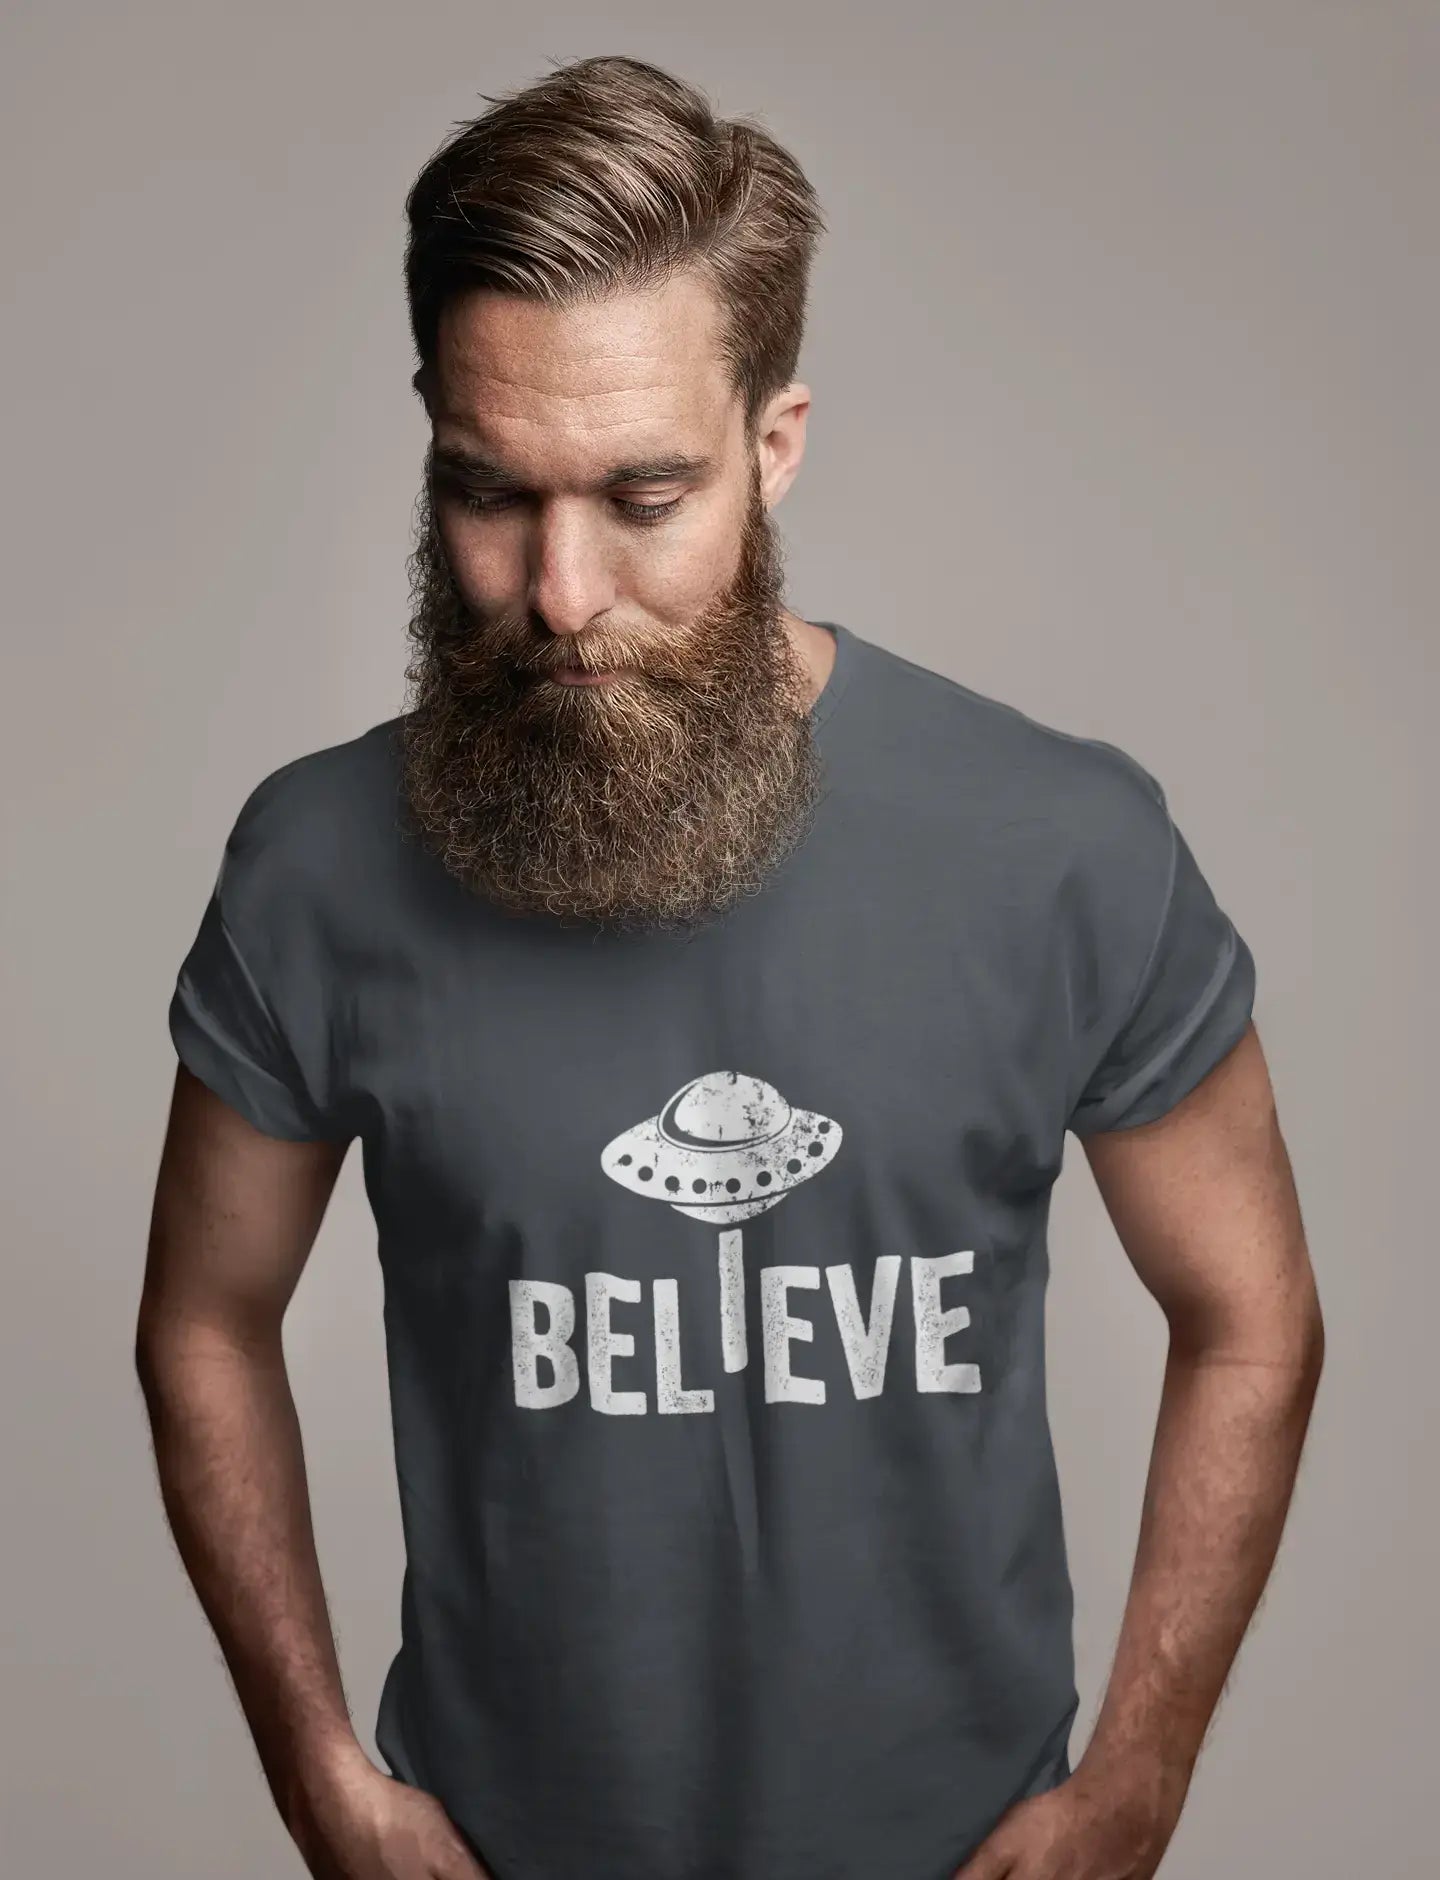 ULTRABASIC - Graphic Men's Believe UFO Alien T-Shirt Funny Casual Letter Print Tee Grey Marl